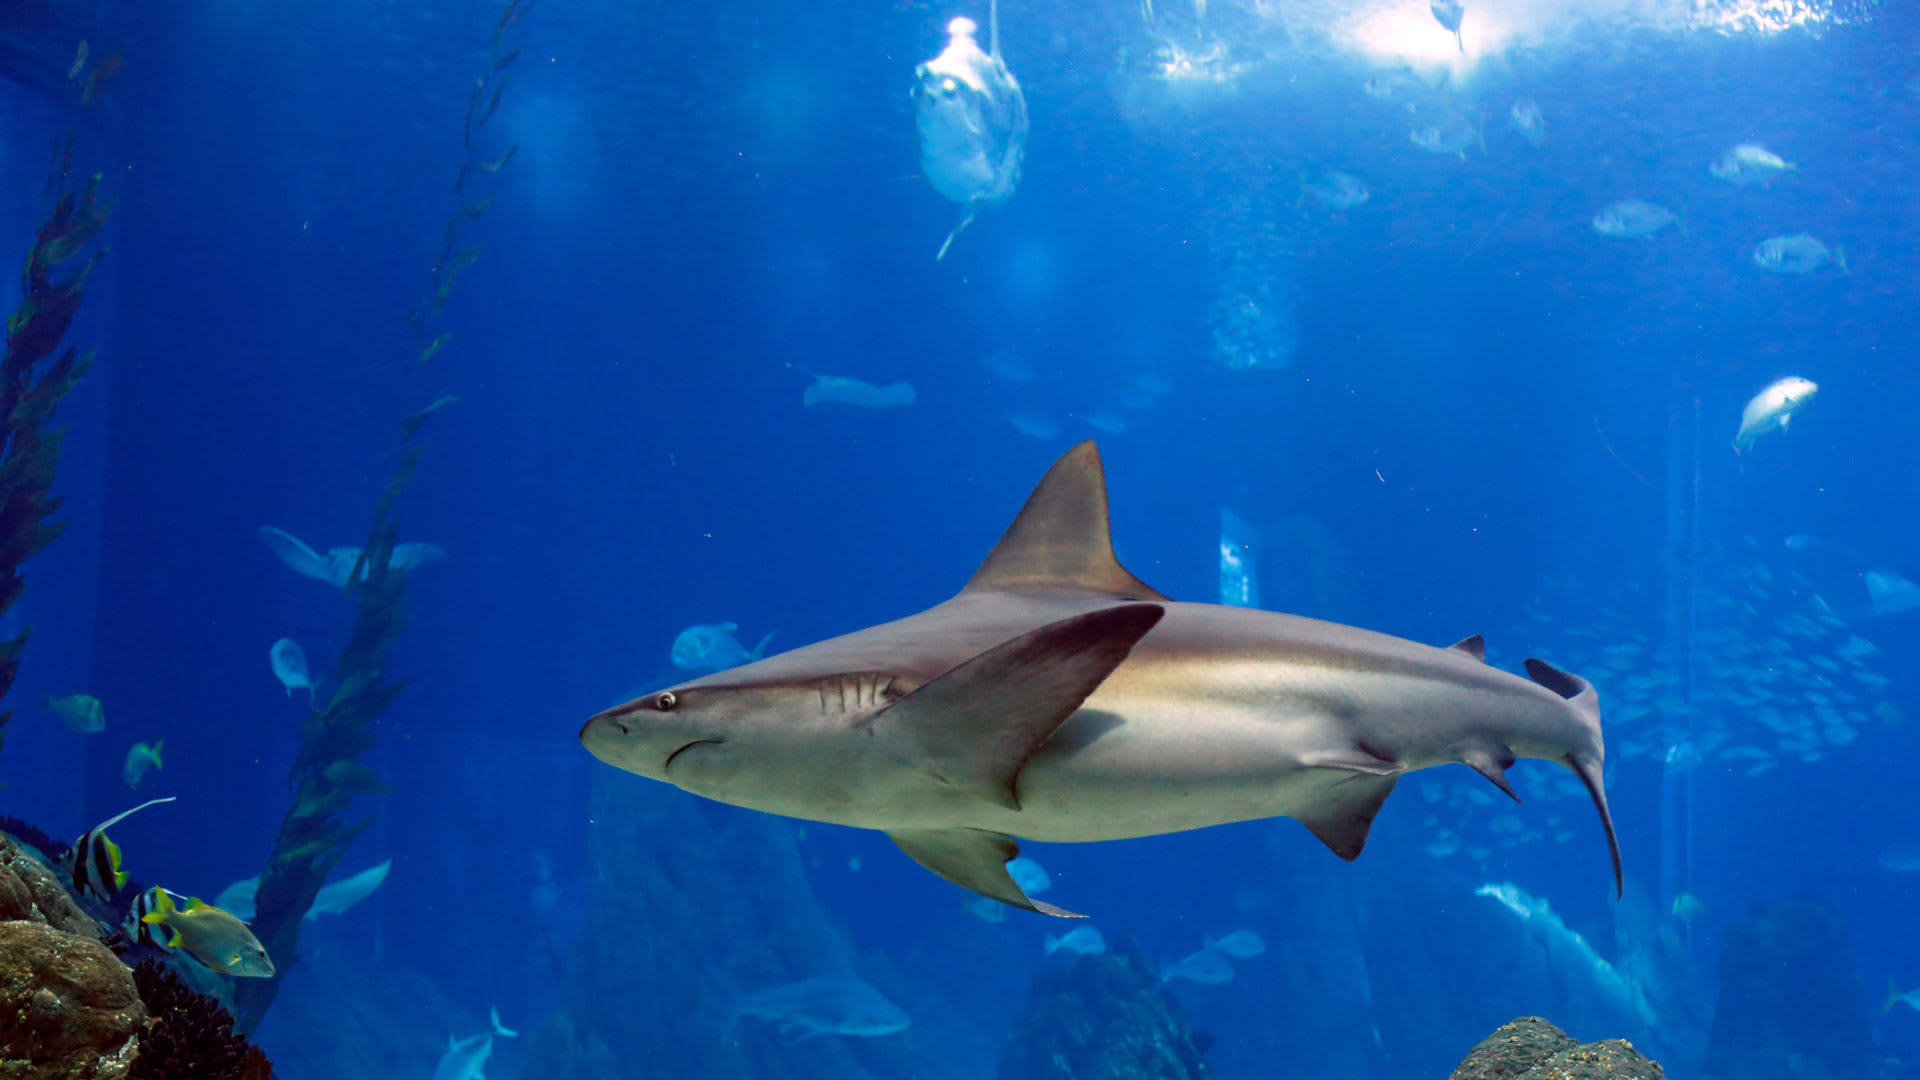 6 lessons from a 'Shark Tank' winner